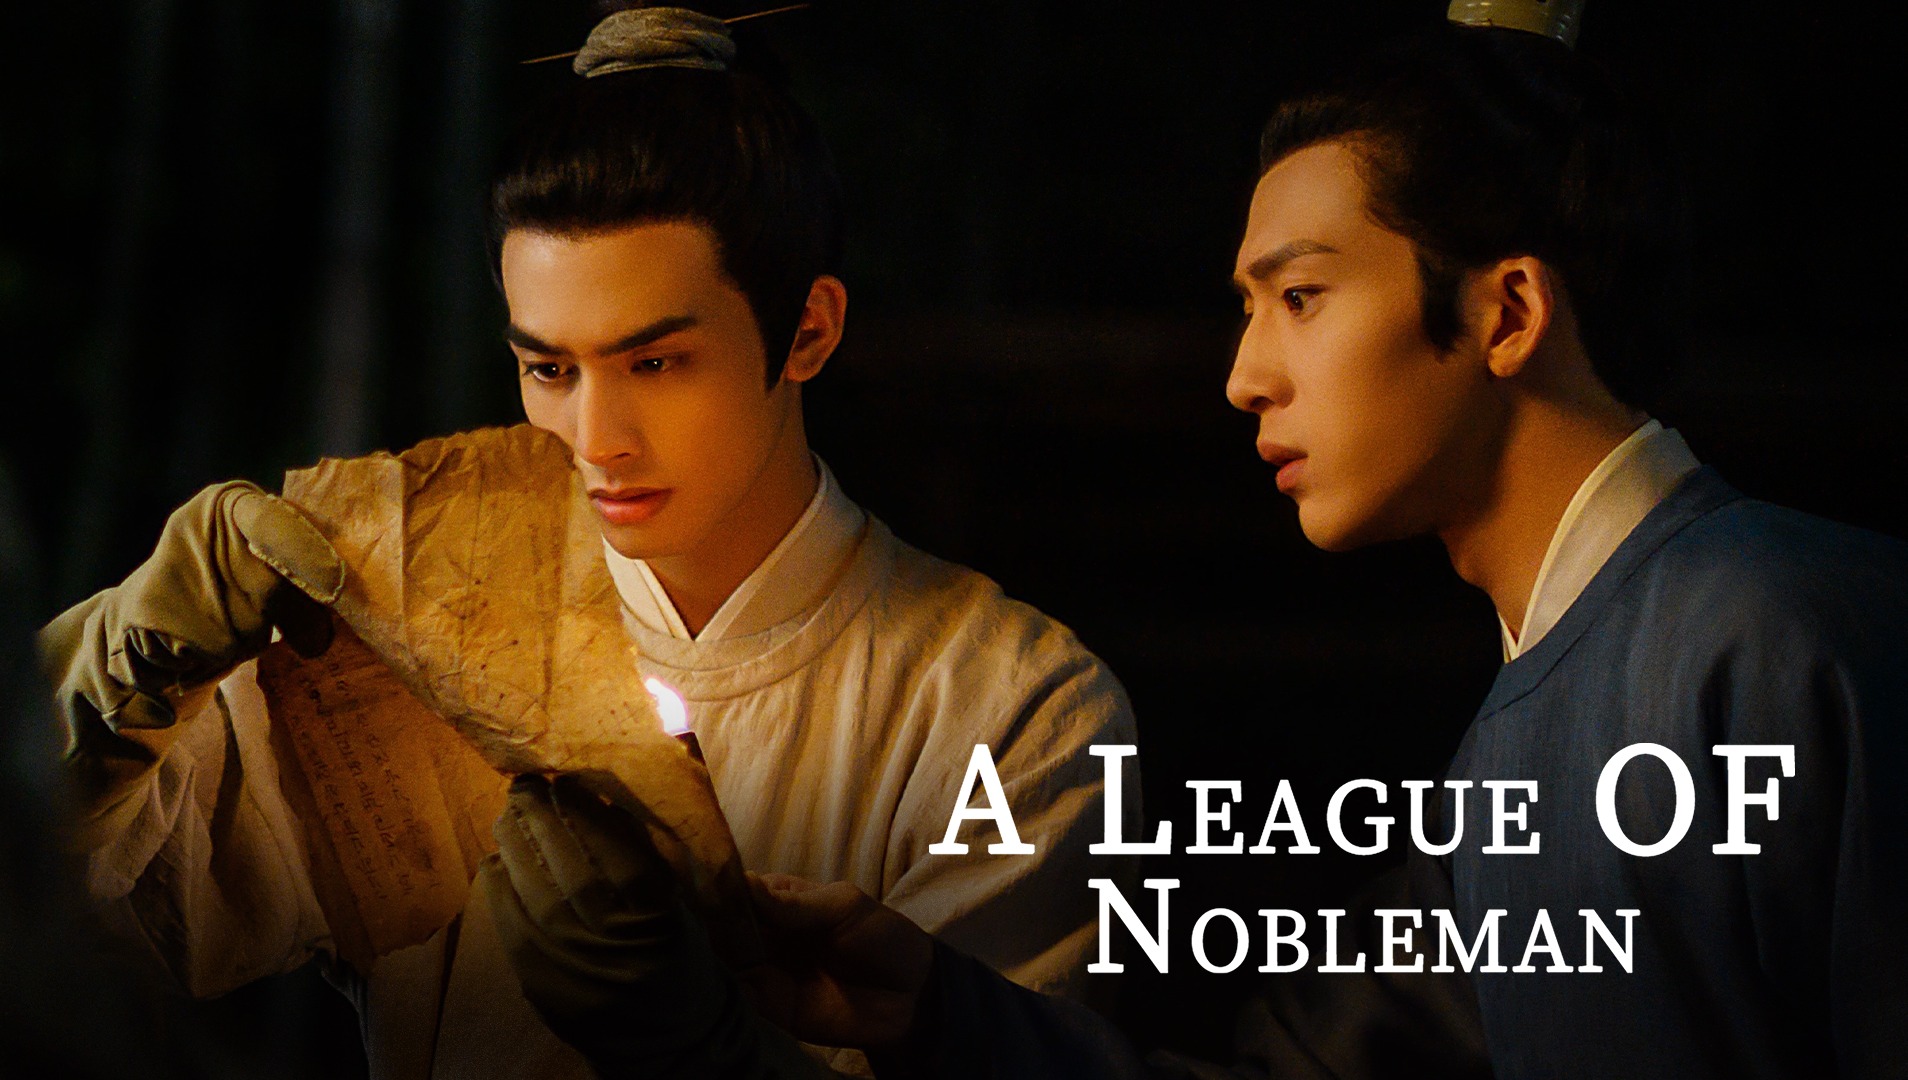 A League of Nobleman